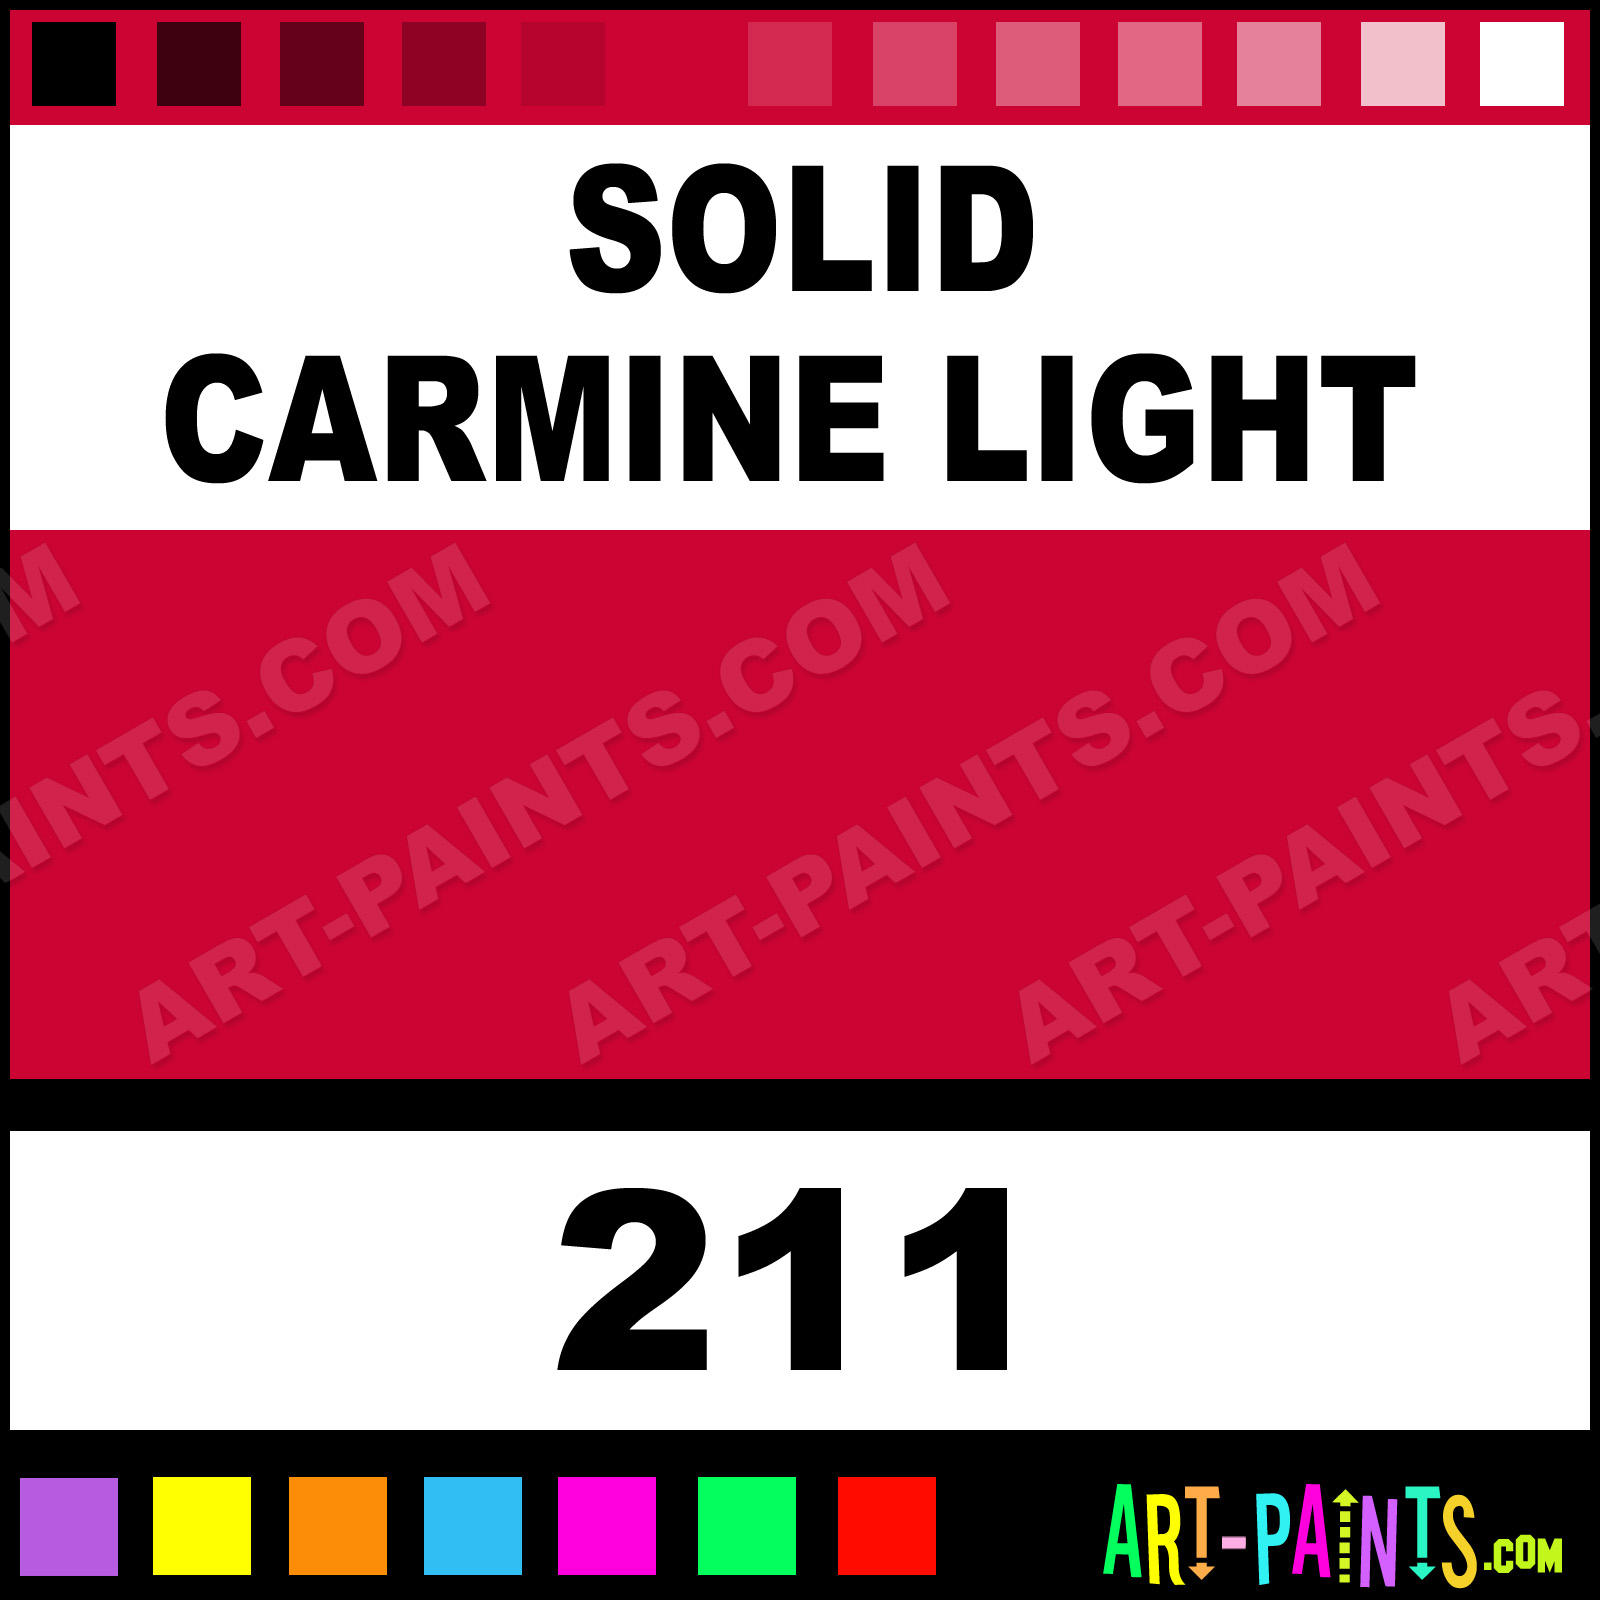 http://www.art-paints.com/Paints/Oil/Fragonard/Solid-Carmine-Light/Solid-Carmine-Light-xlg.jpg